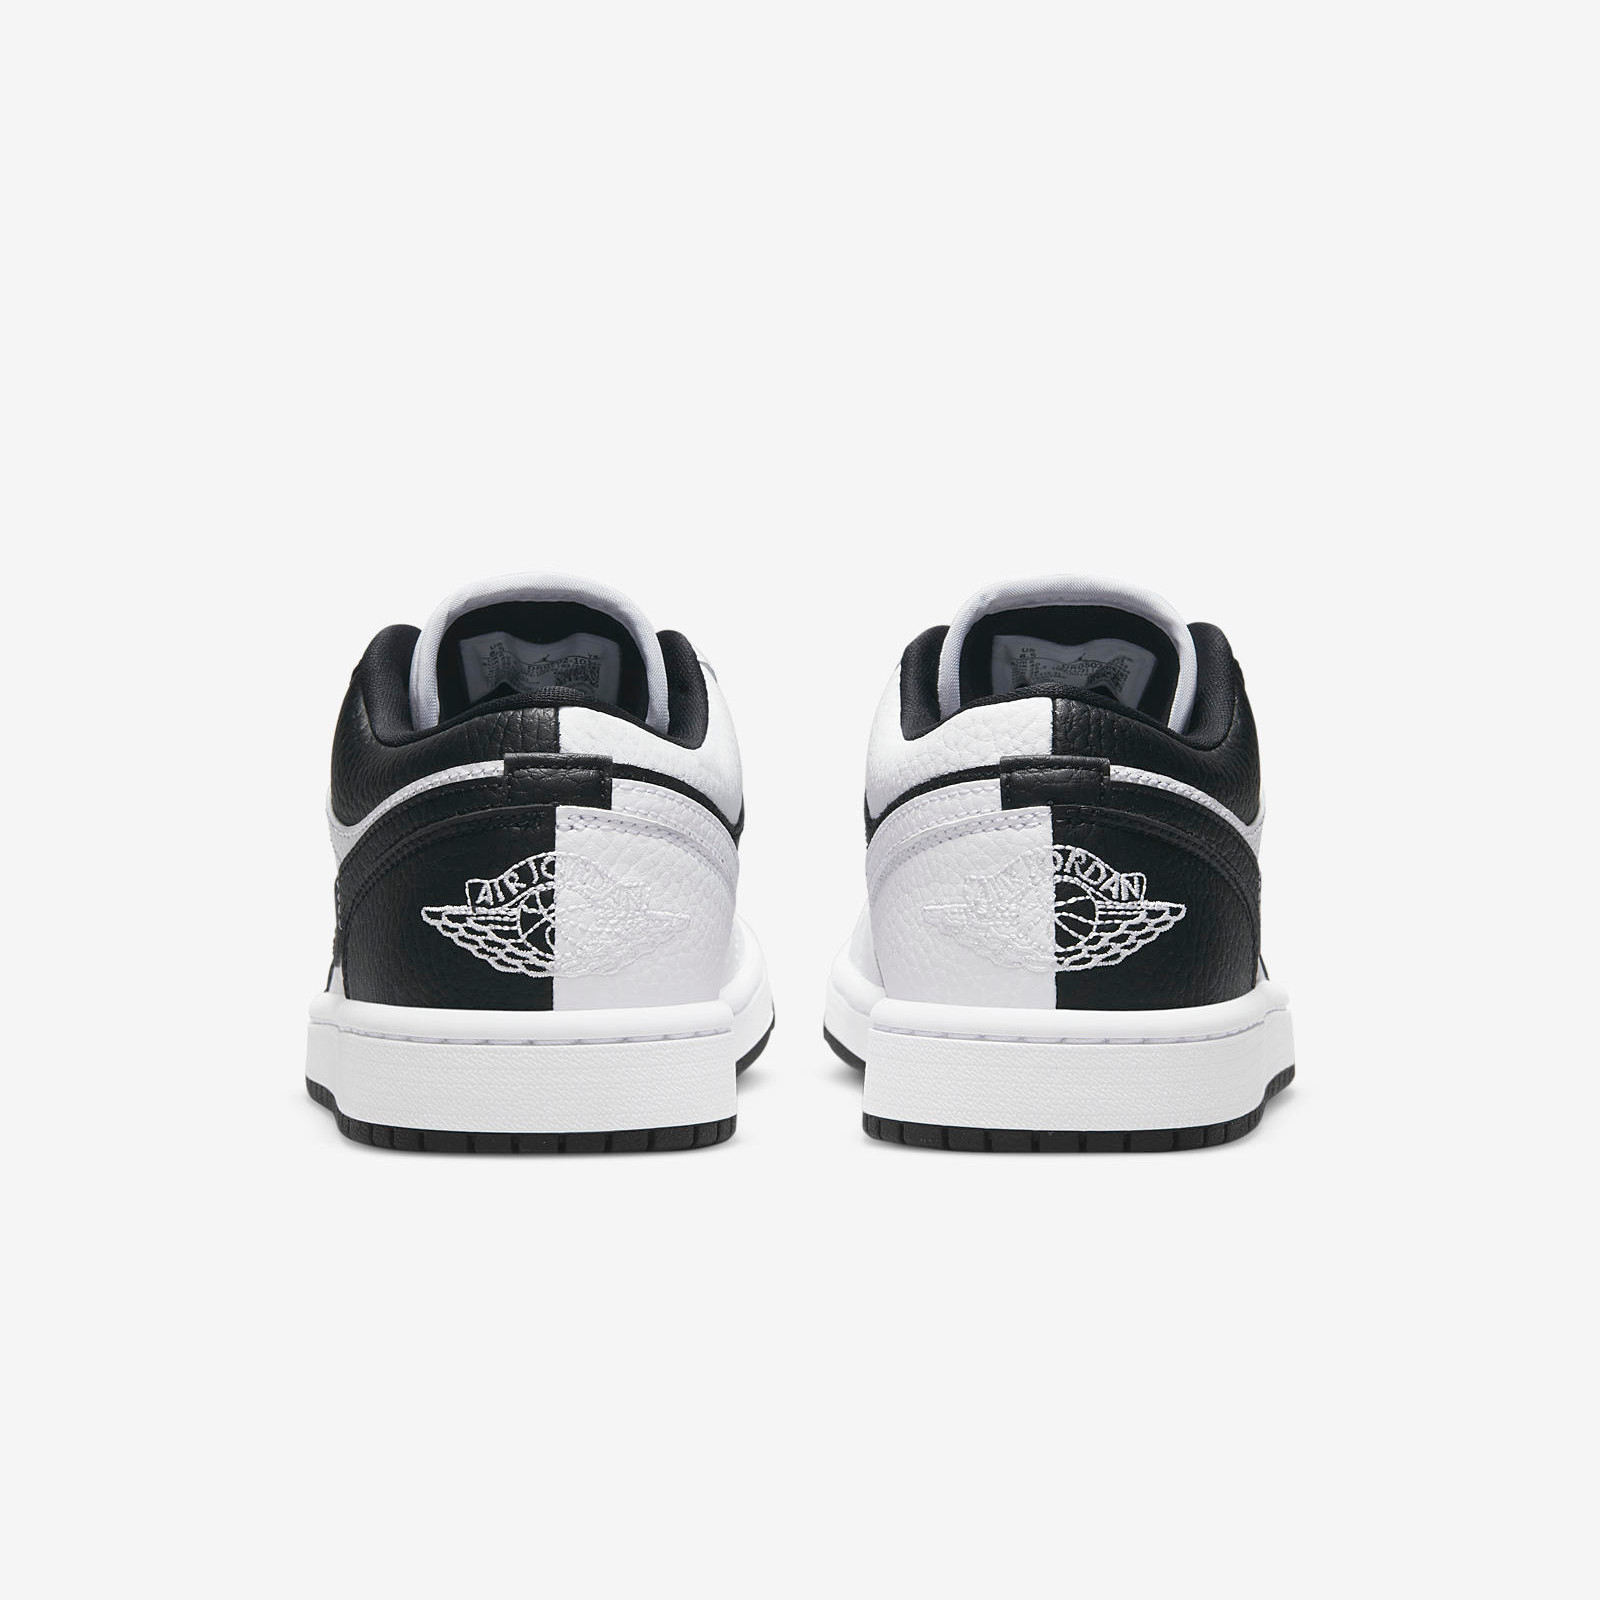 Air Jordan 1 Low
Black / White